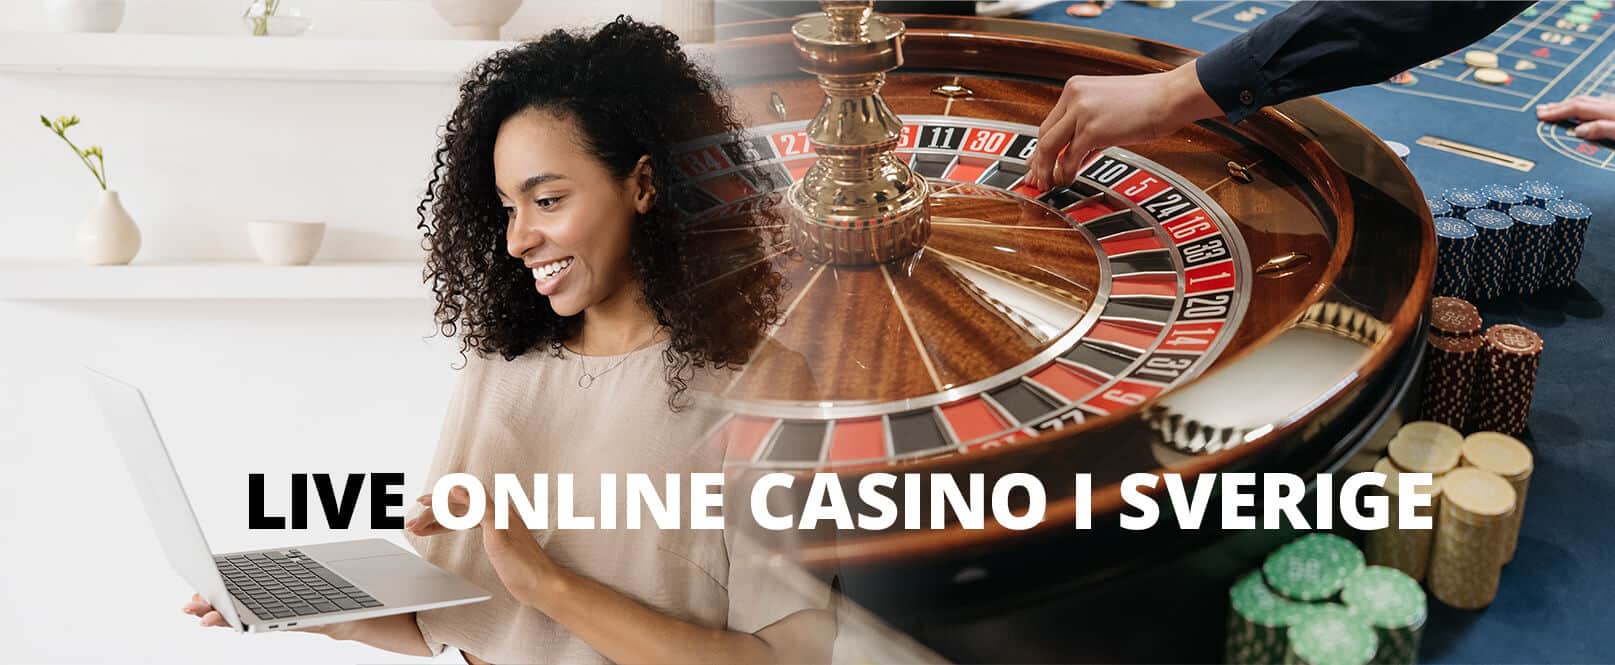 live online casino i sverige